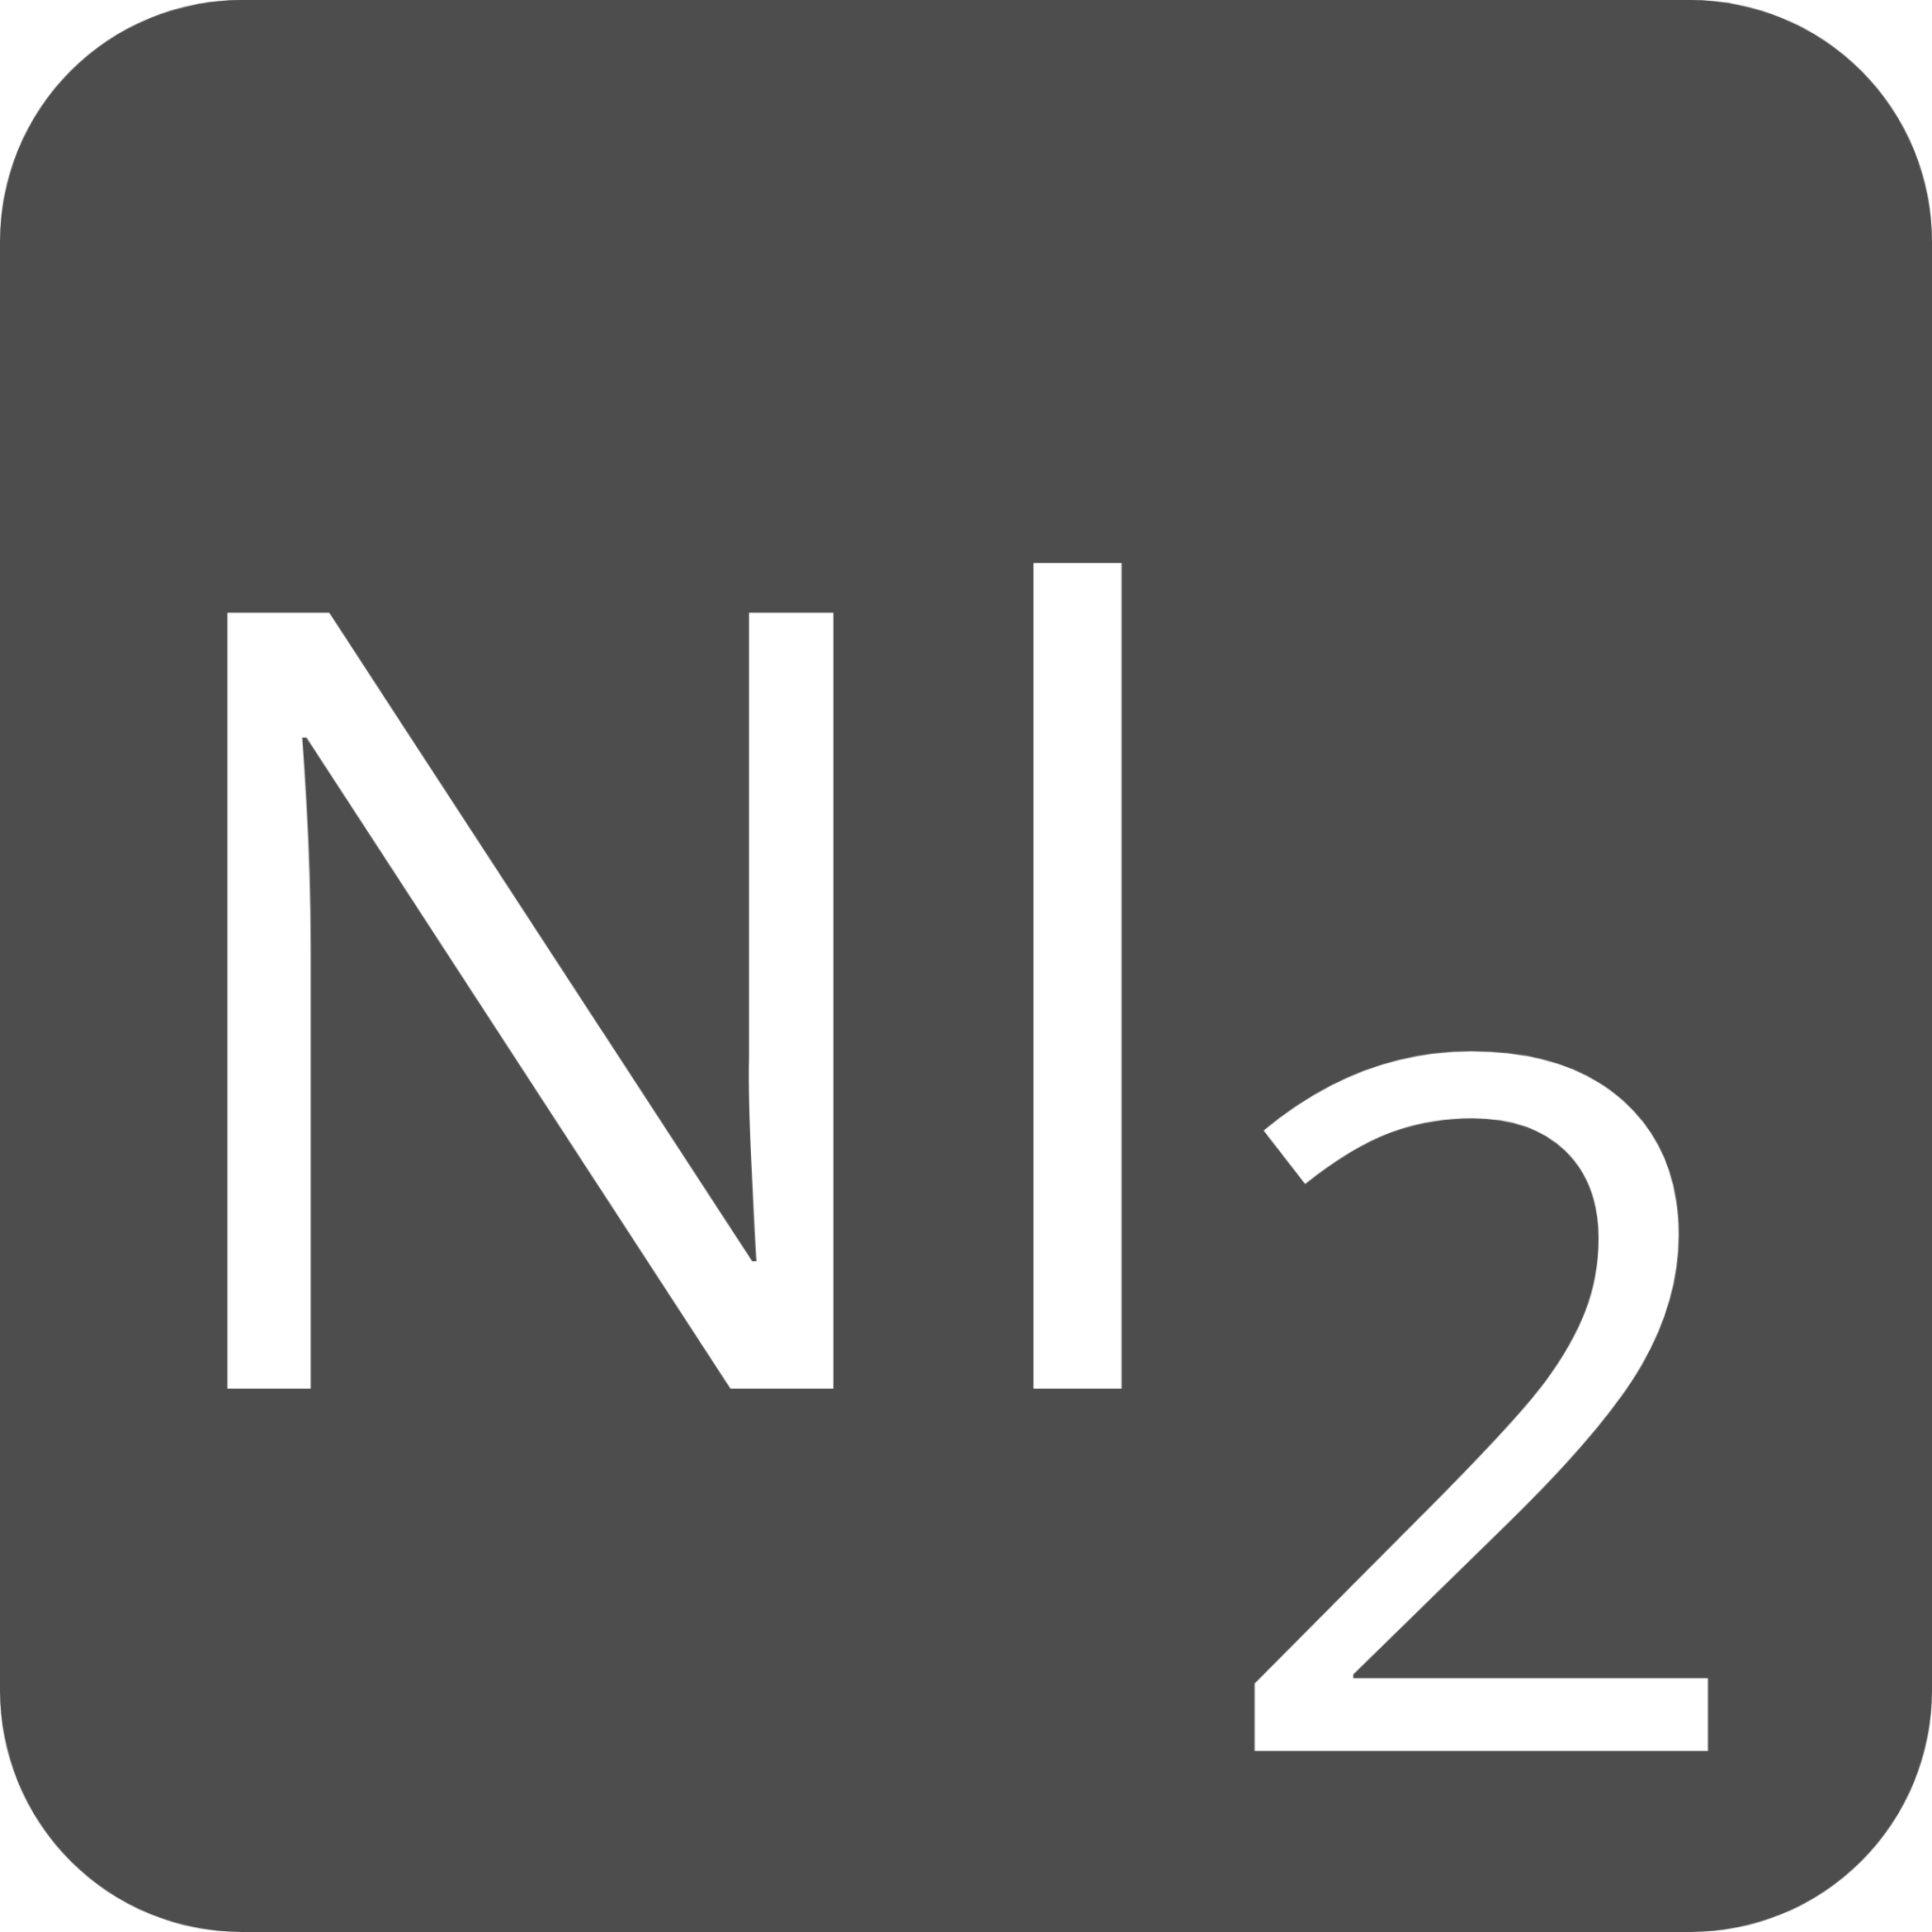 indicator keyboard Nl 2 icon